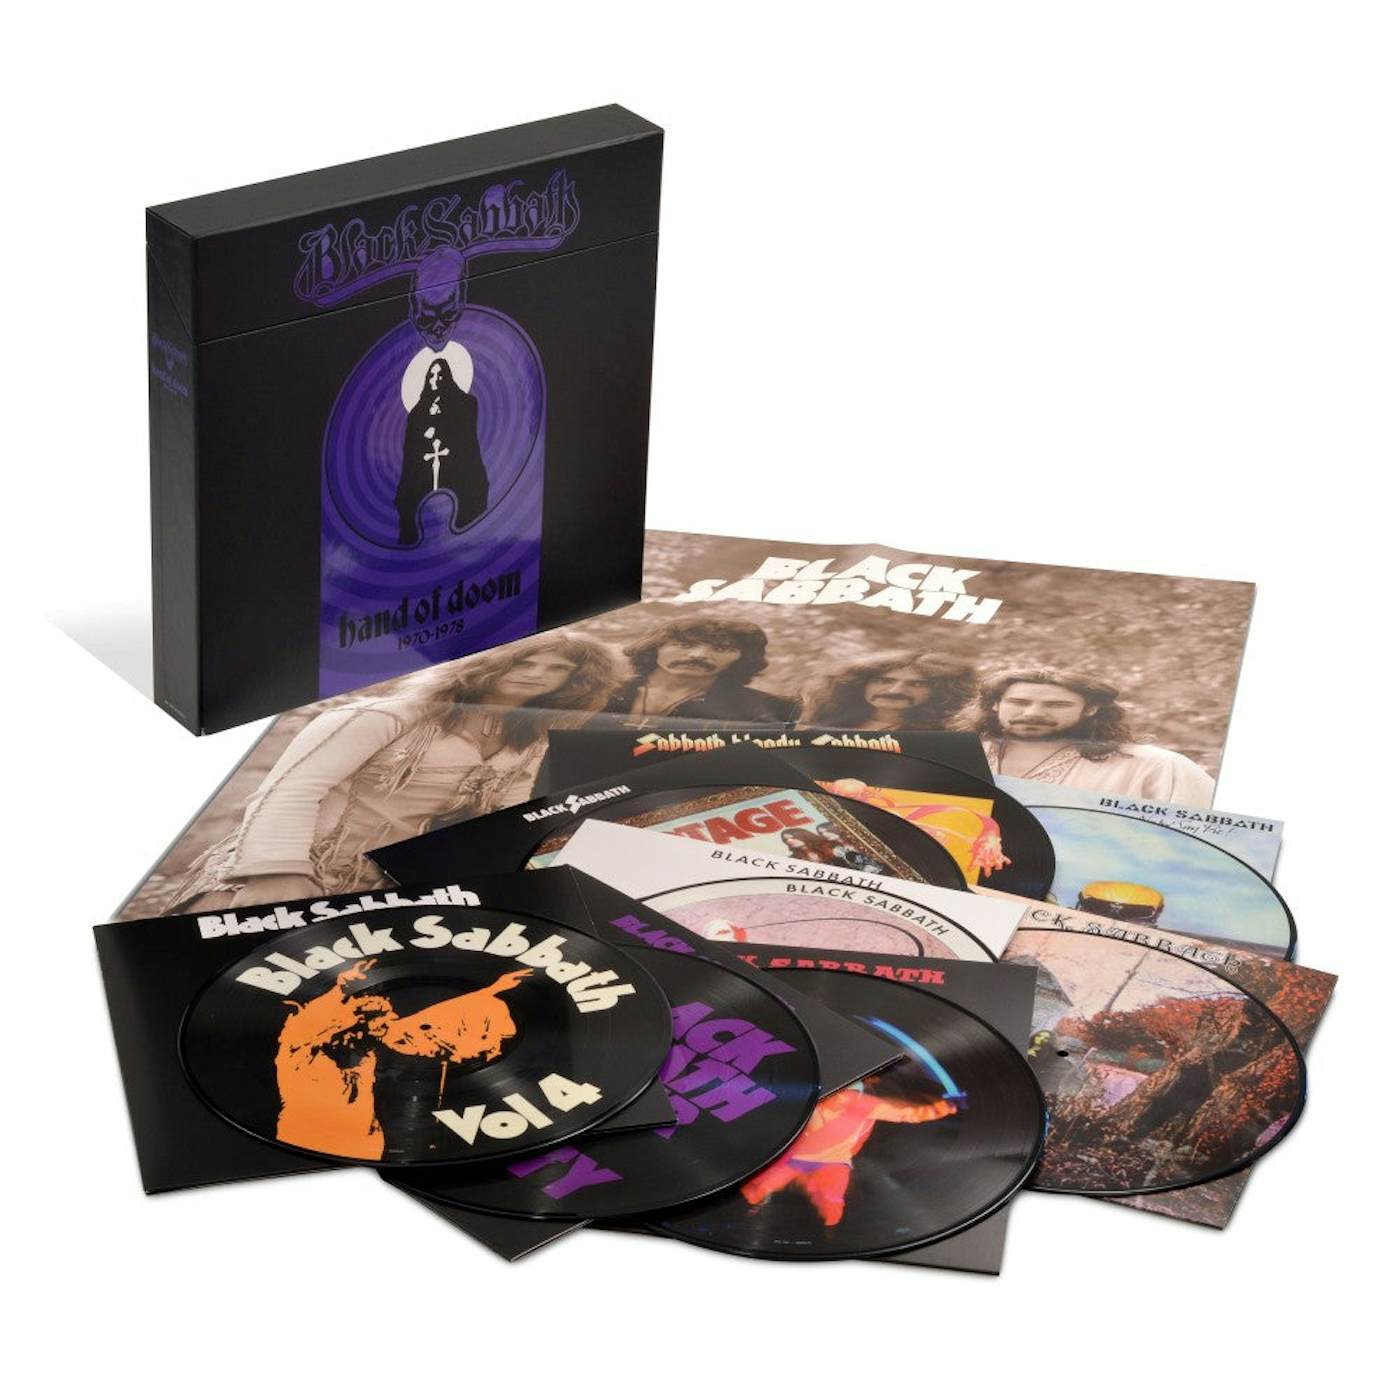 Black Sabbath Hand of Doom 1970 - 1978 (Picture Disc Boxed Set)